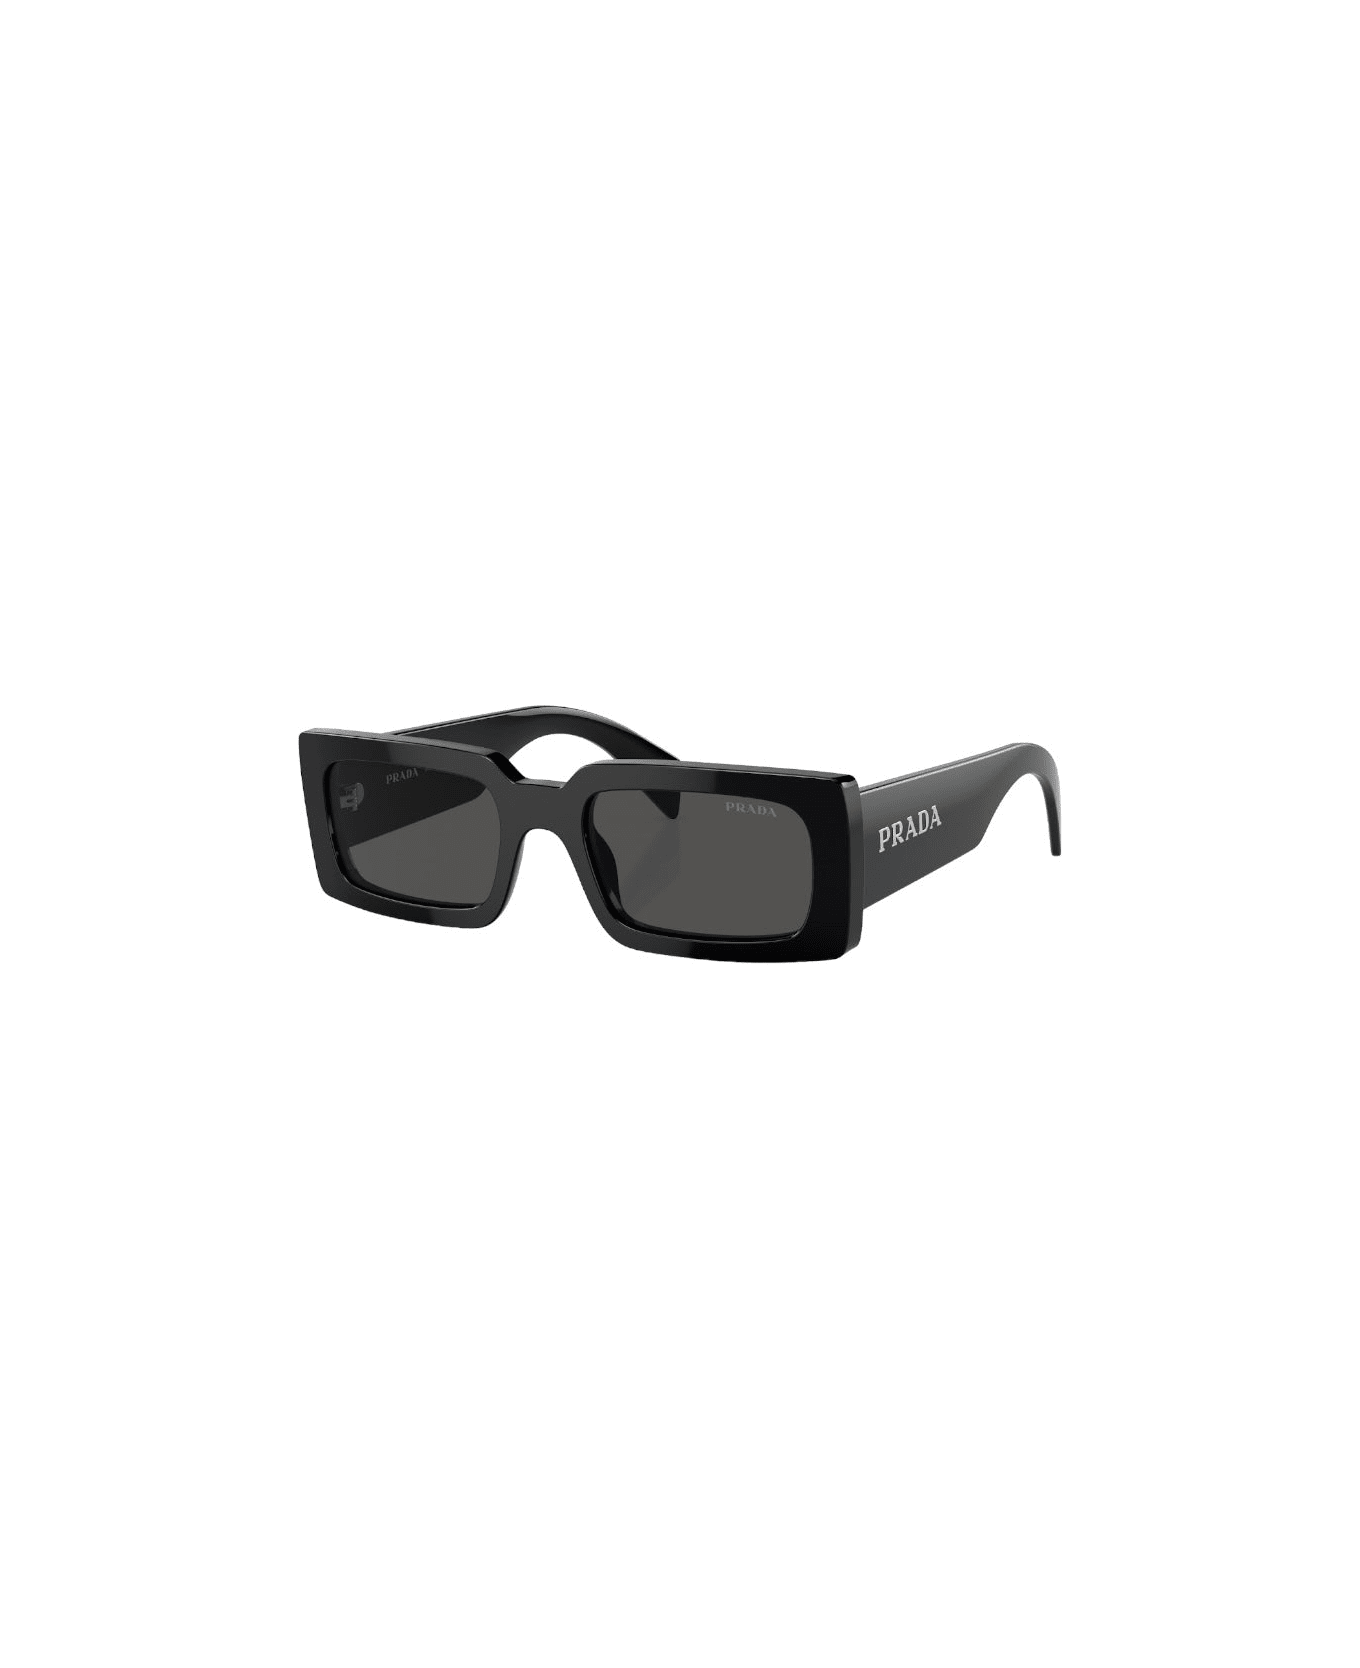 Prada Eyewear Spr A 07s Sunglasses